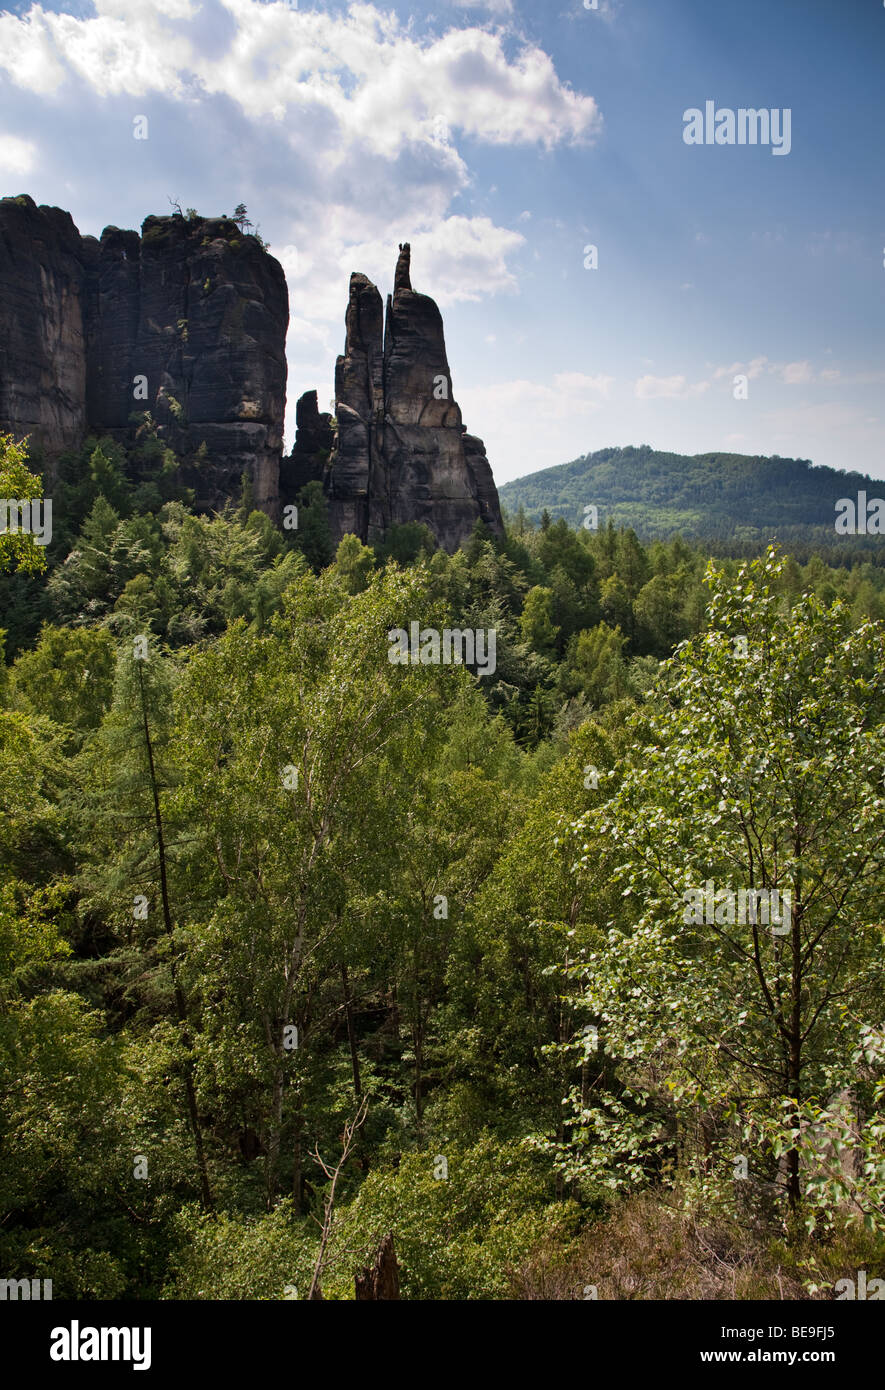 View of the spiky rocks of Affensteine in the National park of Sächsische Schweiz in Saxony, Germany Stock Photo